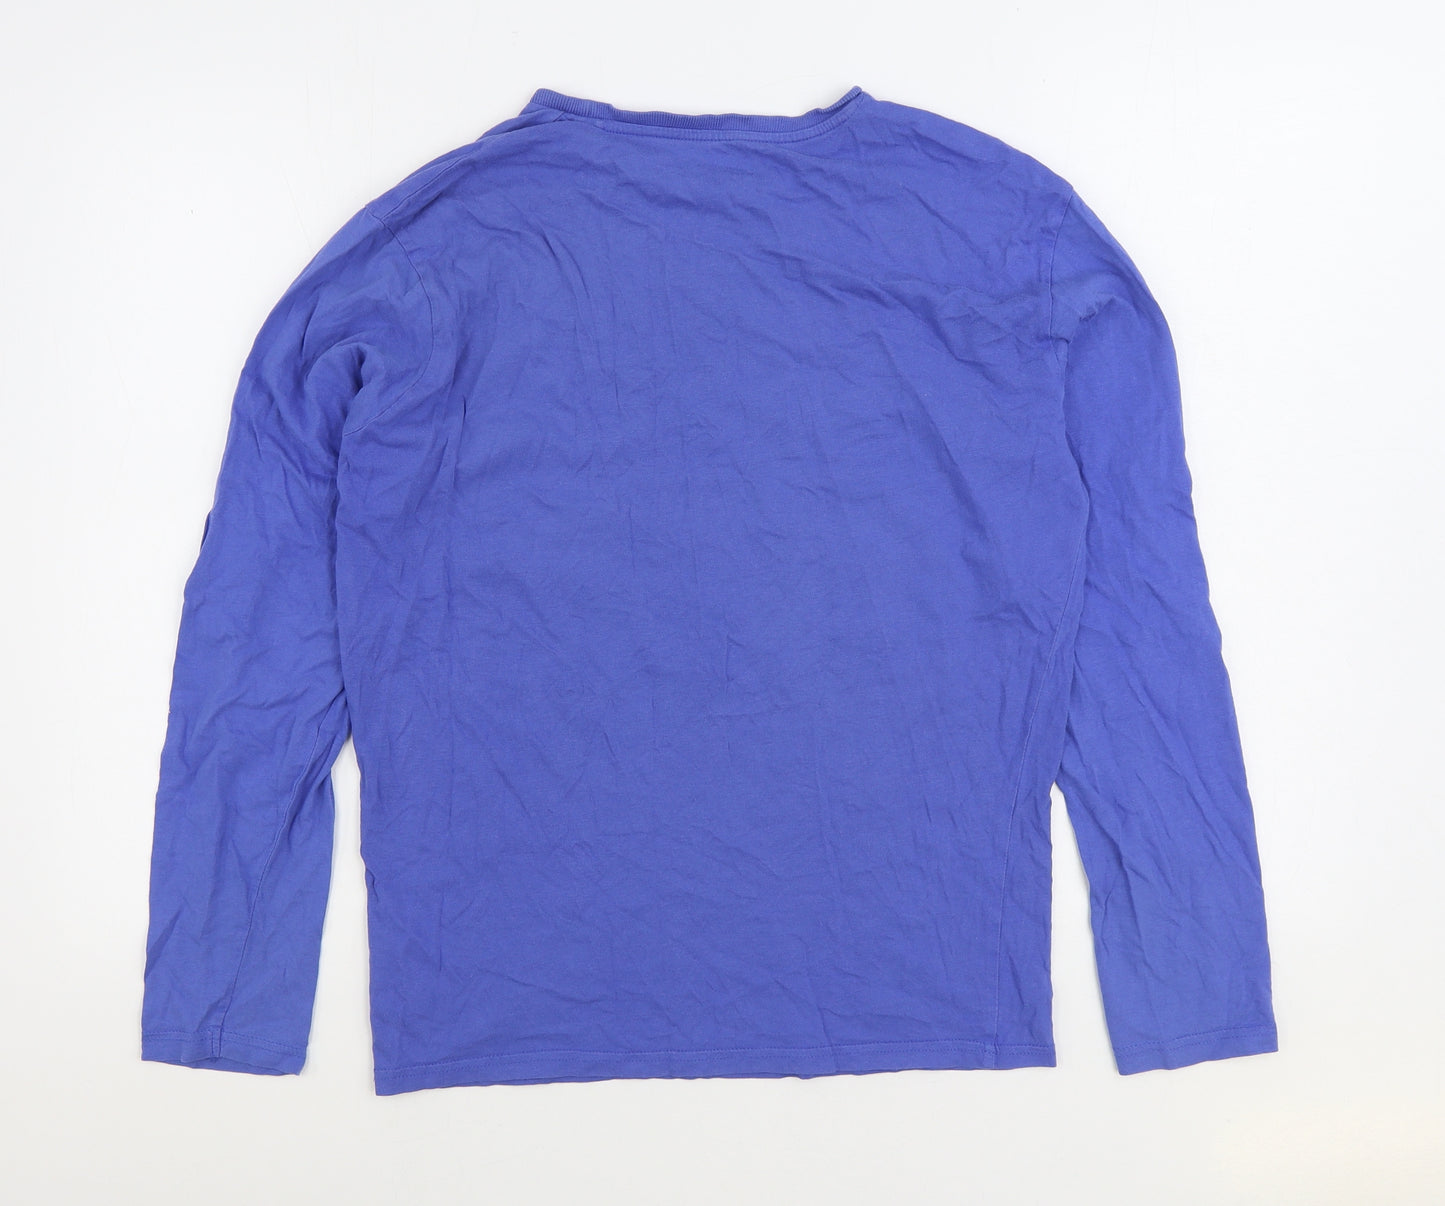 Cedar Wood State Mens Blue Cotton T-Shirt Size M Round Neck - Munich